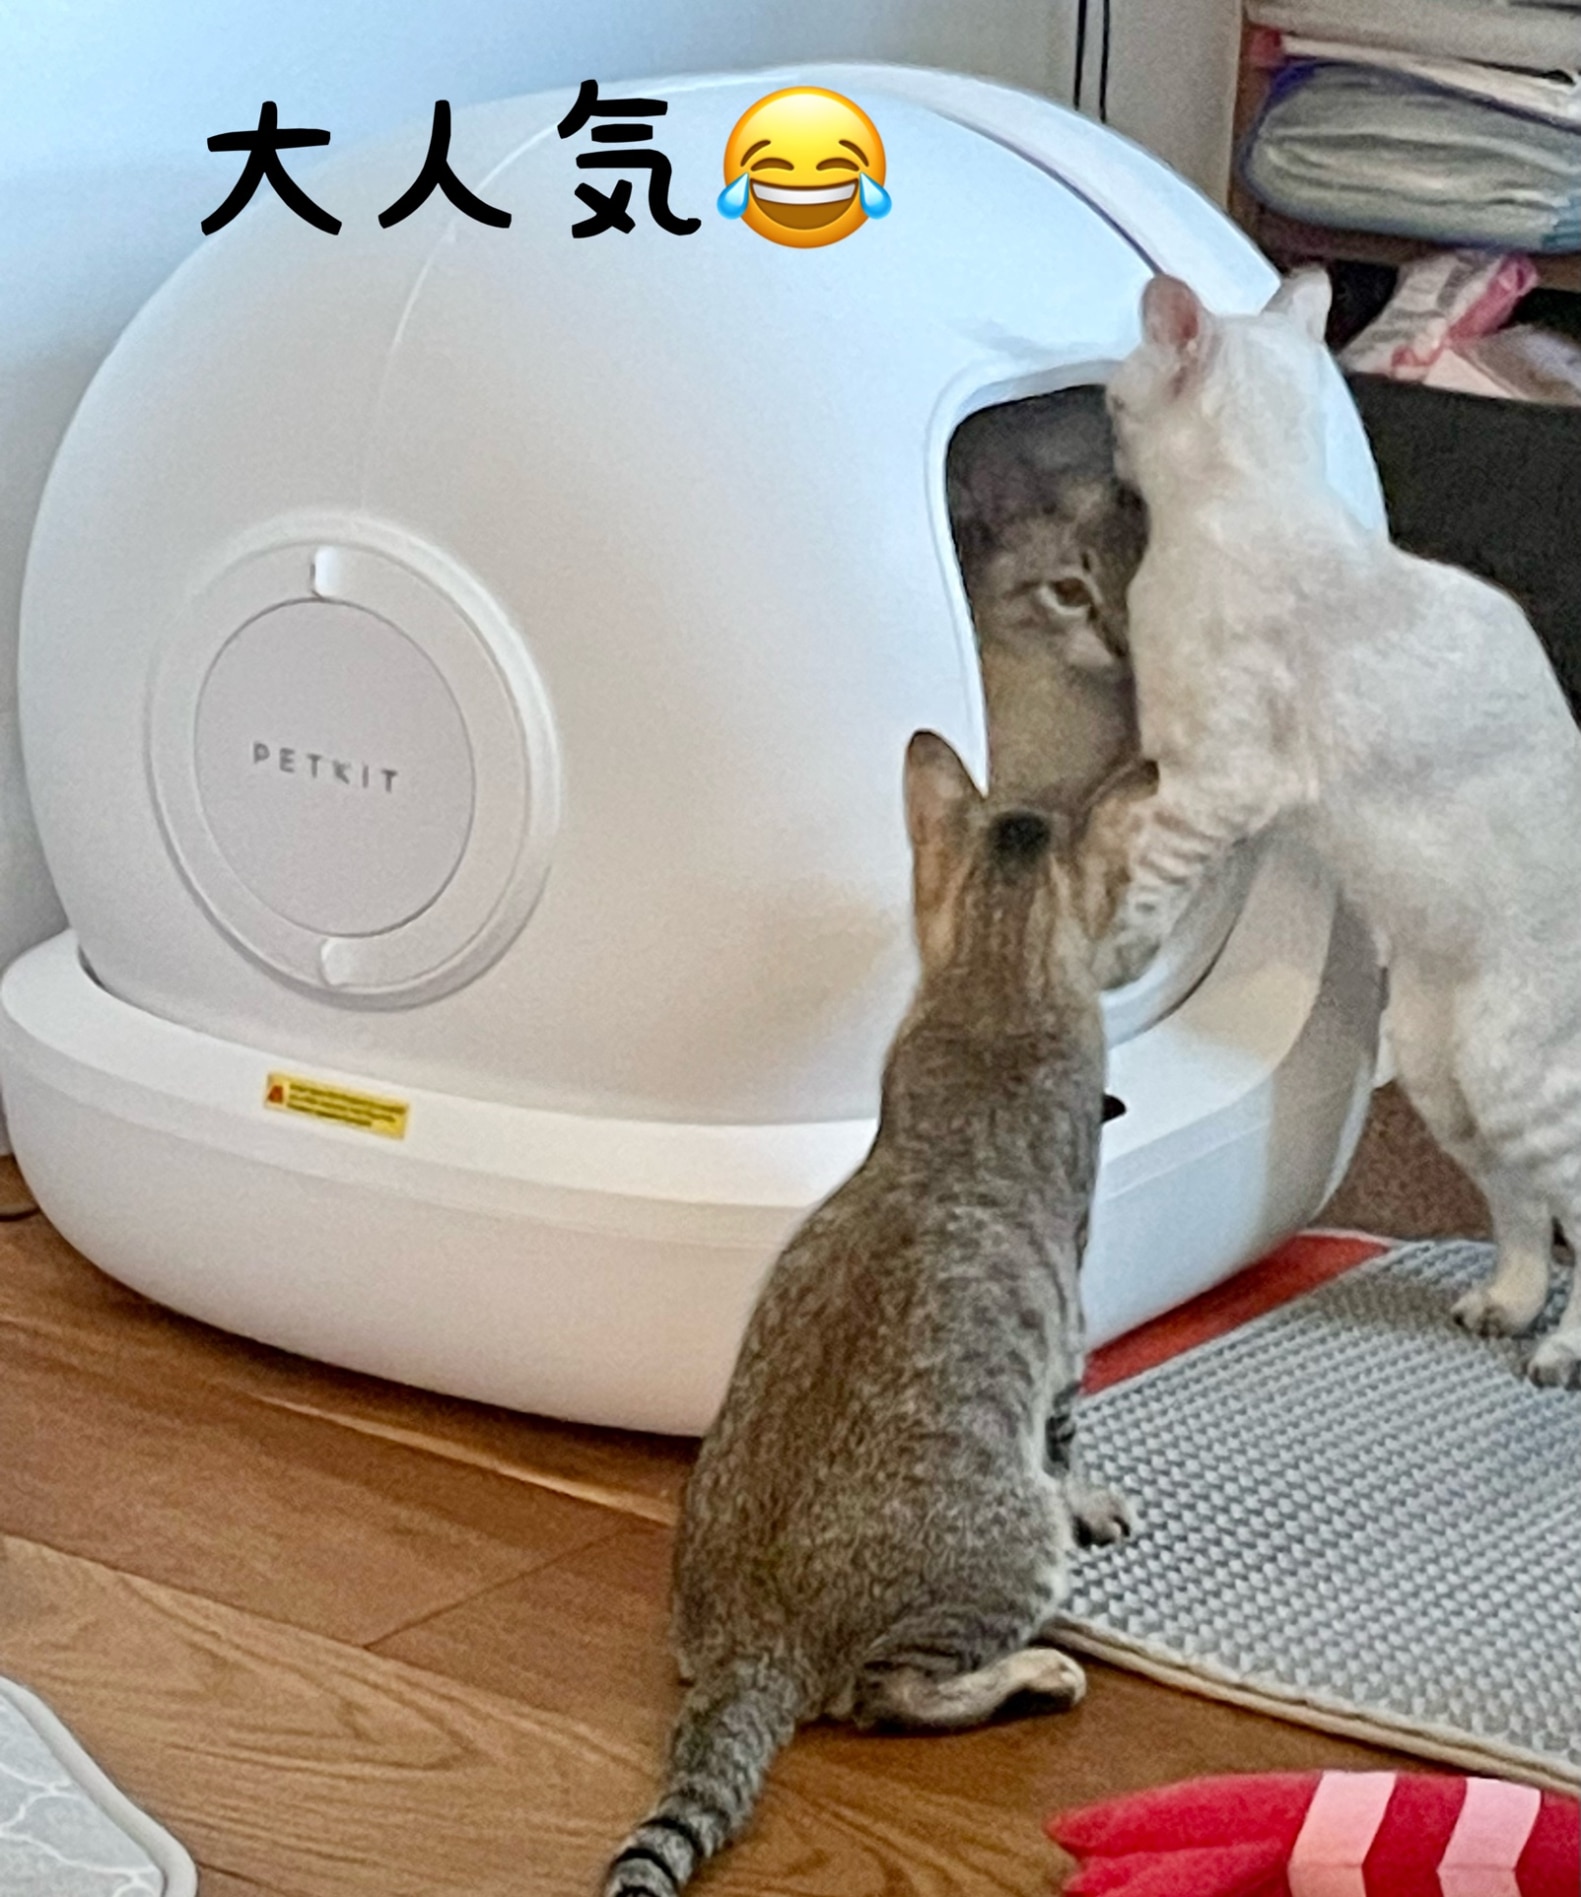 PETKIT 全自動猫トイレ PURA MAX ペットキット ネコトイレ - その他